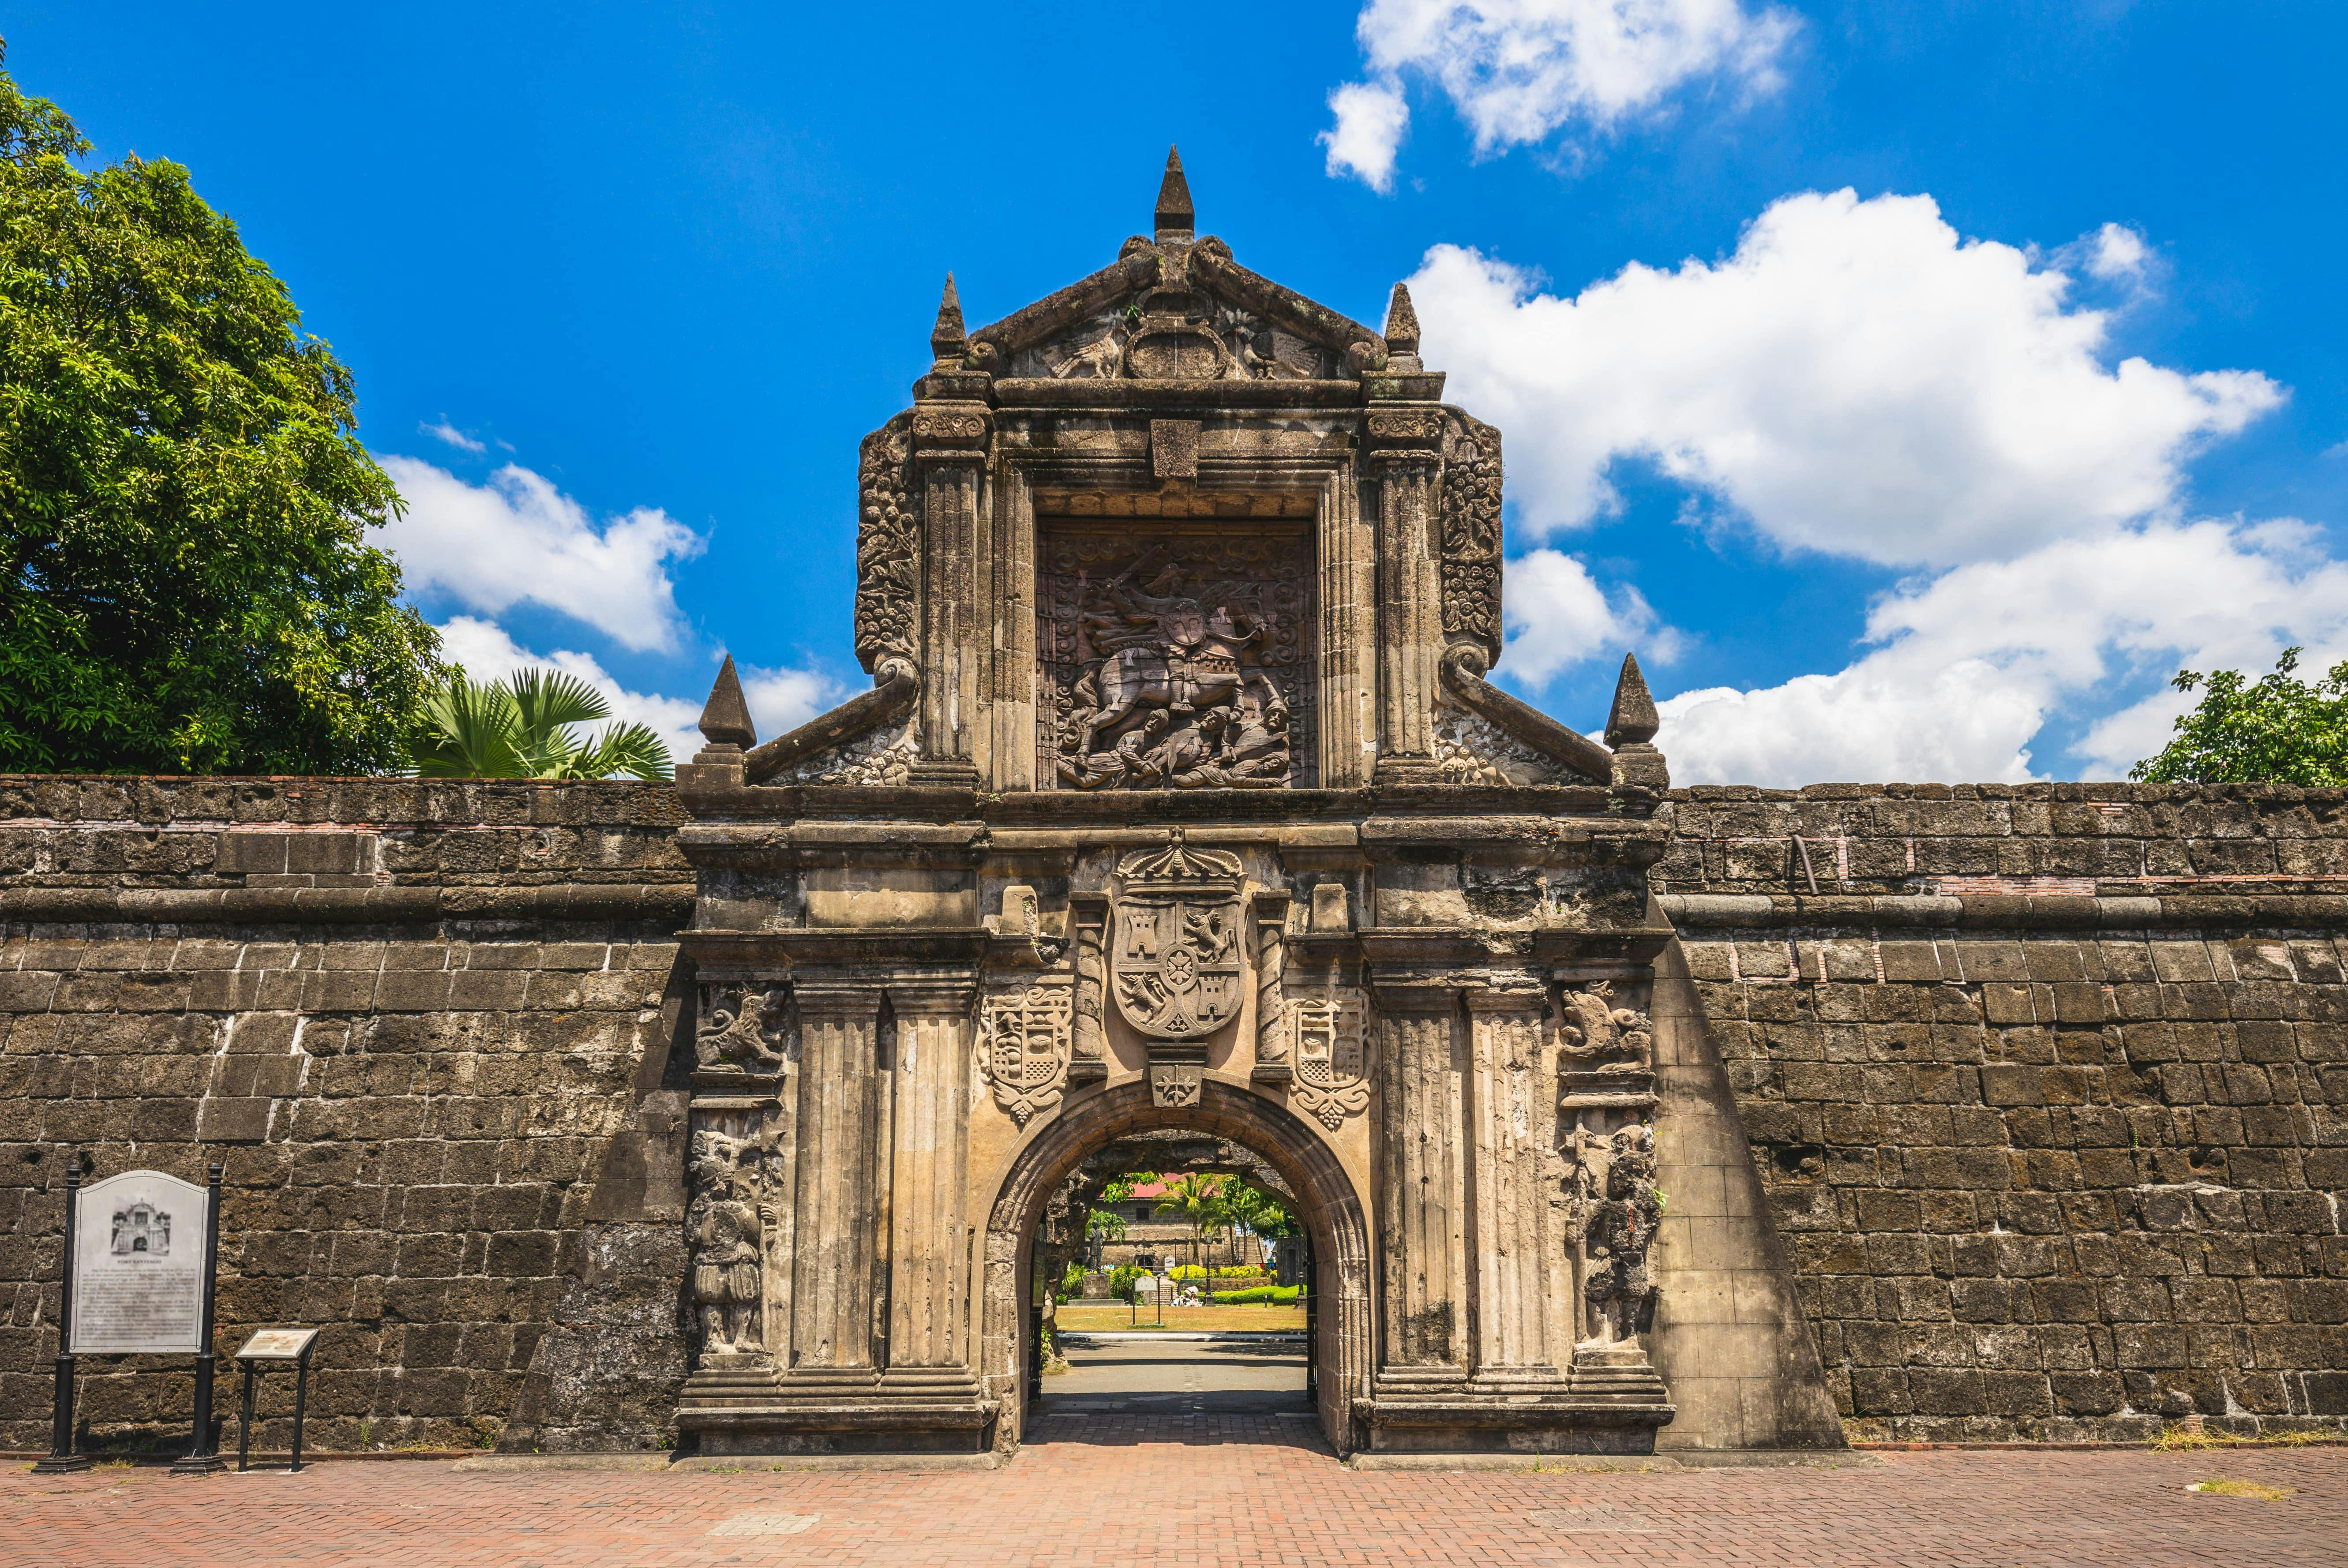 Fort Santiago facade inside Intramuros